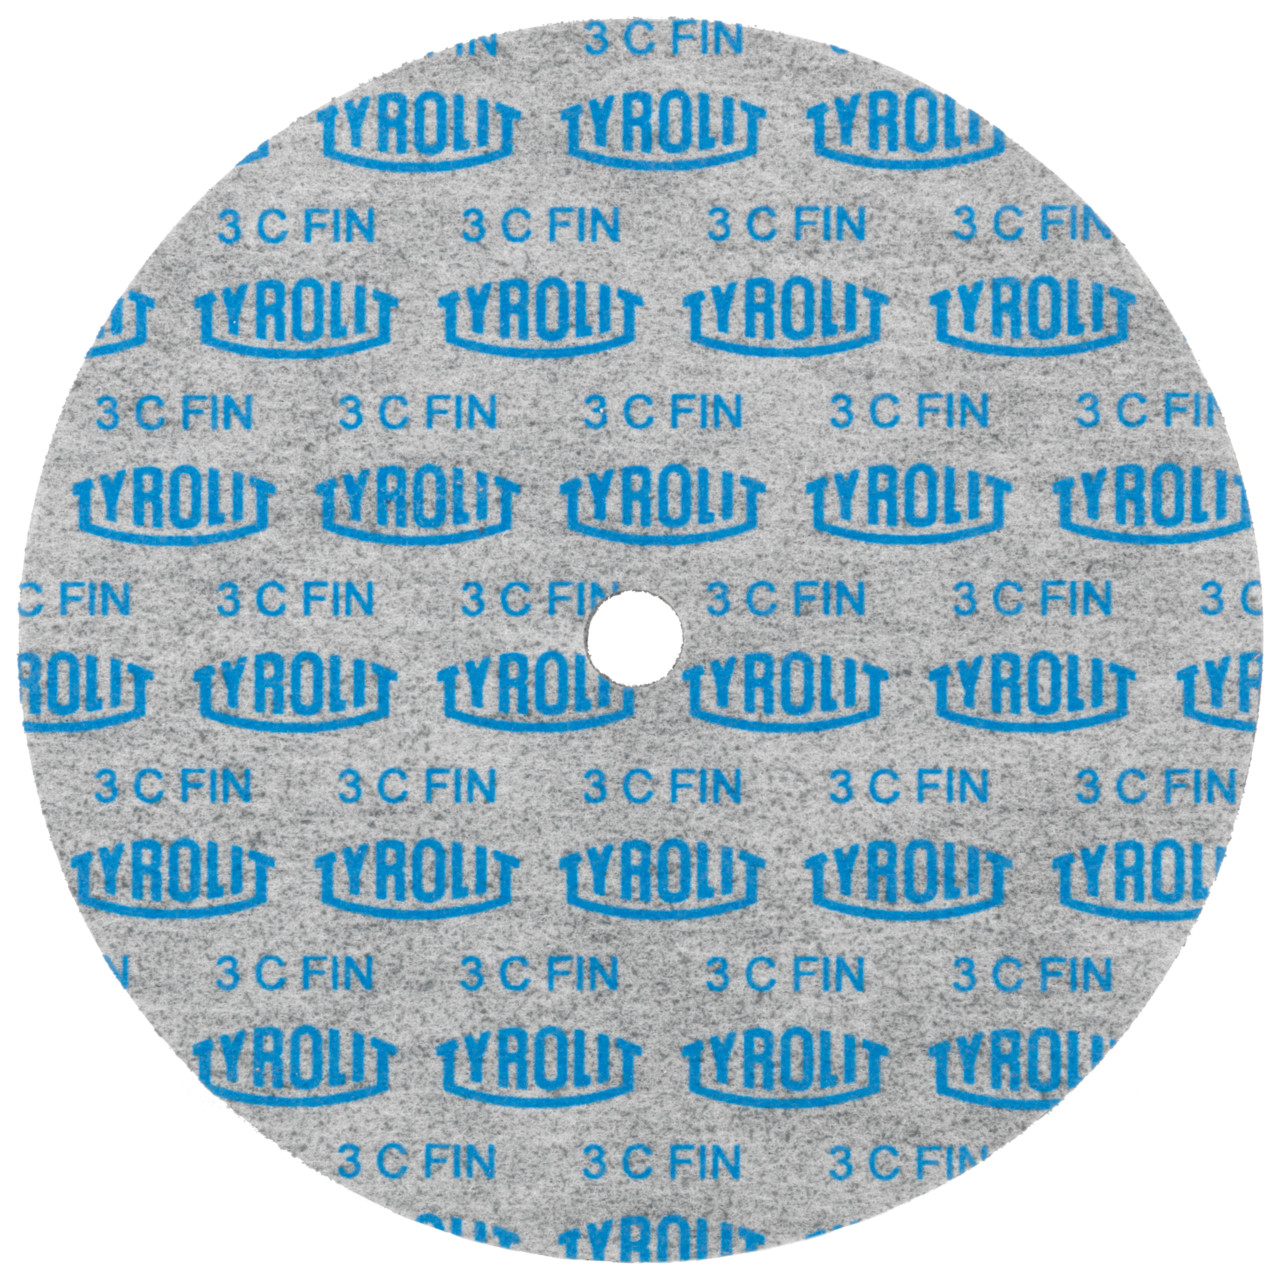 TYROLIT Discos compactos prensados DxDxH 152x25x25,4 Inserto universal, 2 A MEDIUM, forma: 1, Art. 34190304